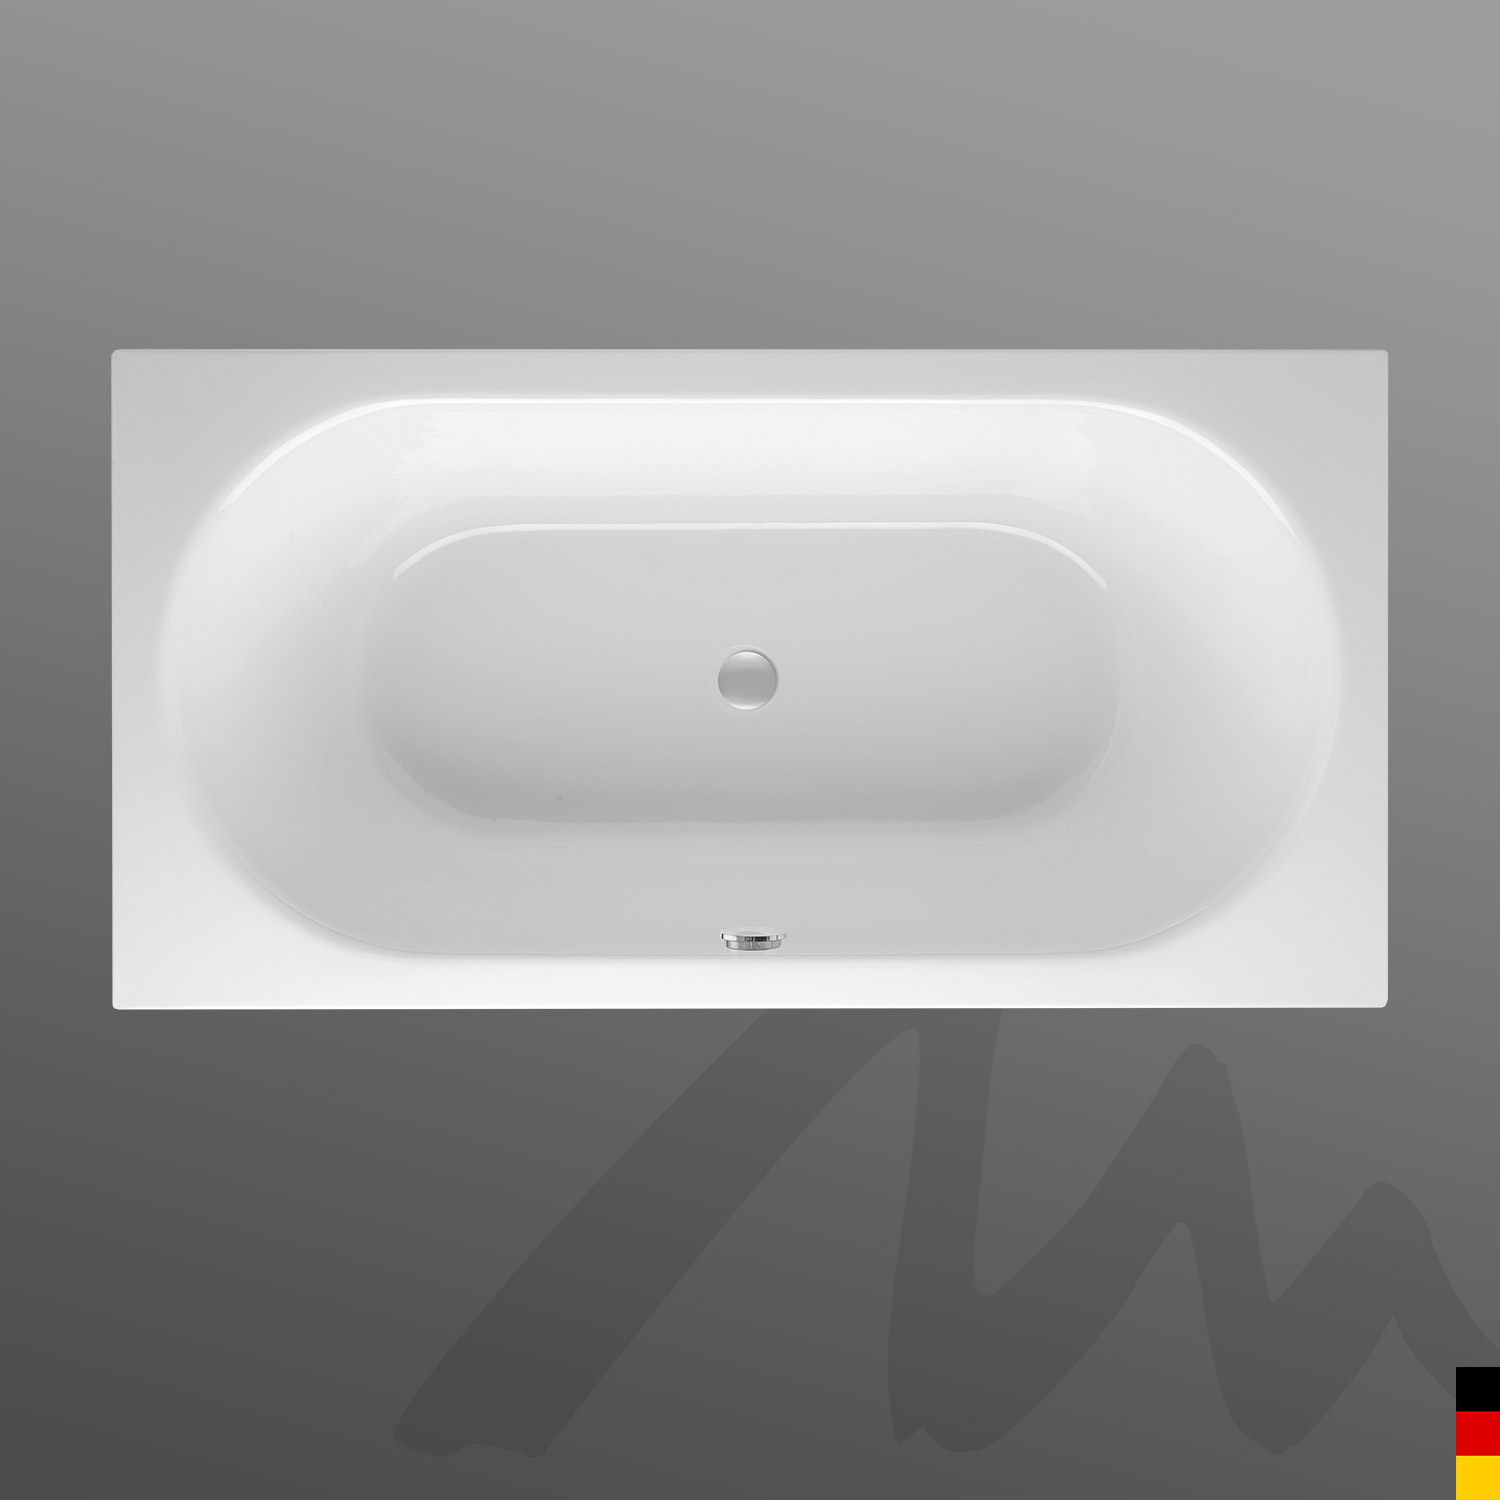 Mauersberger Badewanne Rechteck Ausana 190/95 duo  190x95x46cm  Farbe:rein-weiß